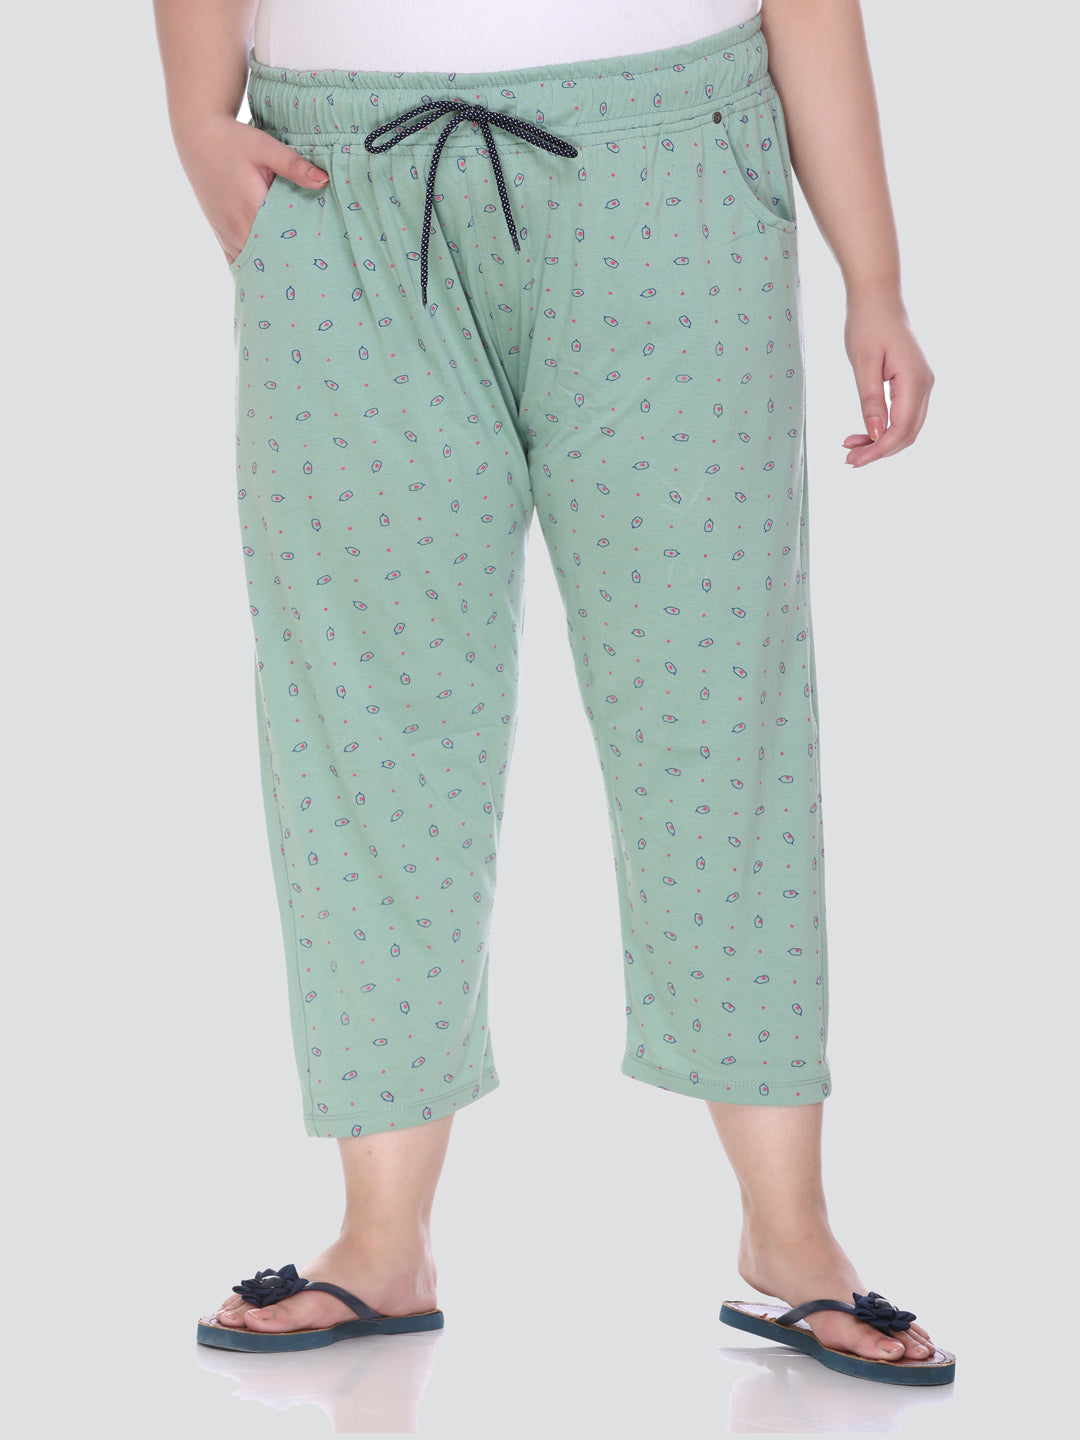 Capri Pajamas - Buy Capri Pajamas online in India